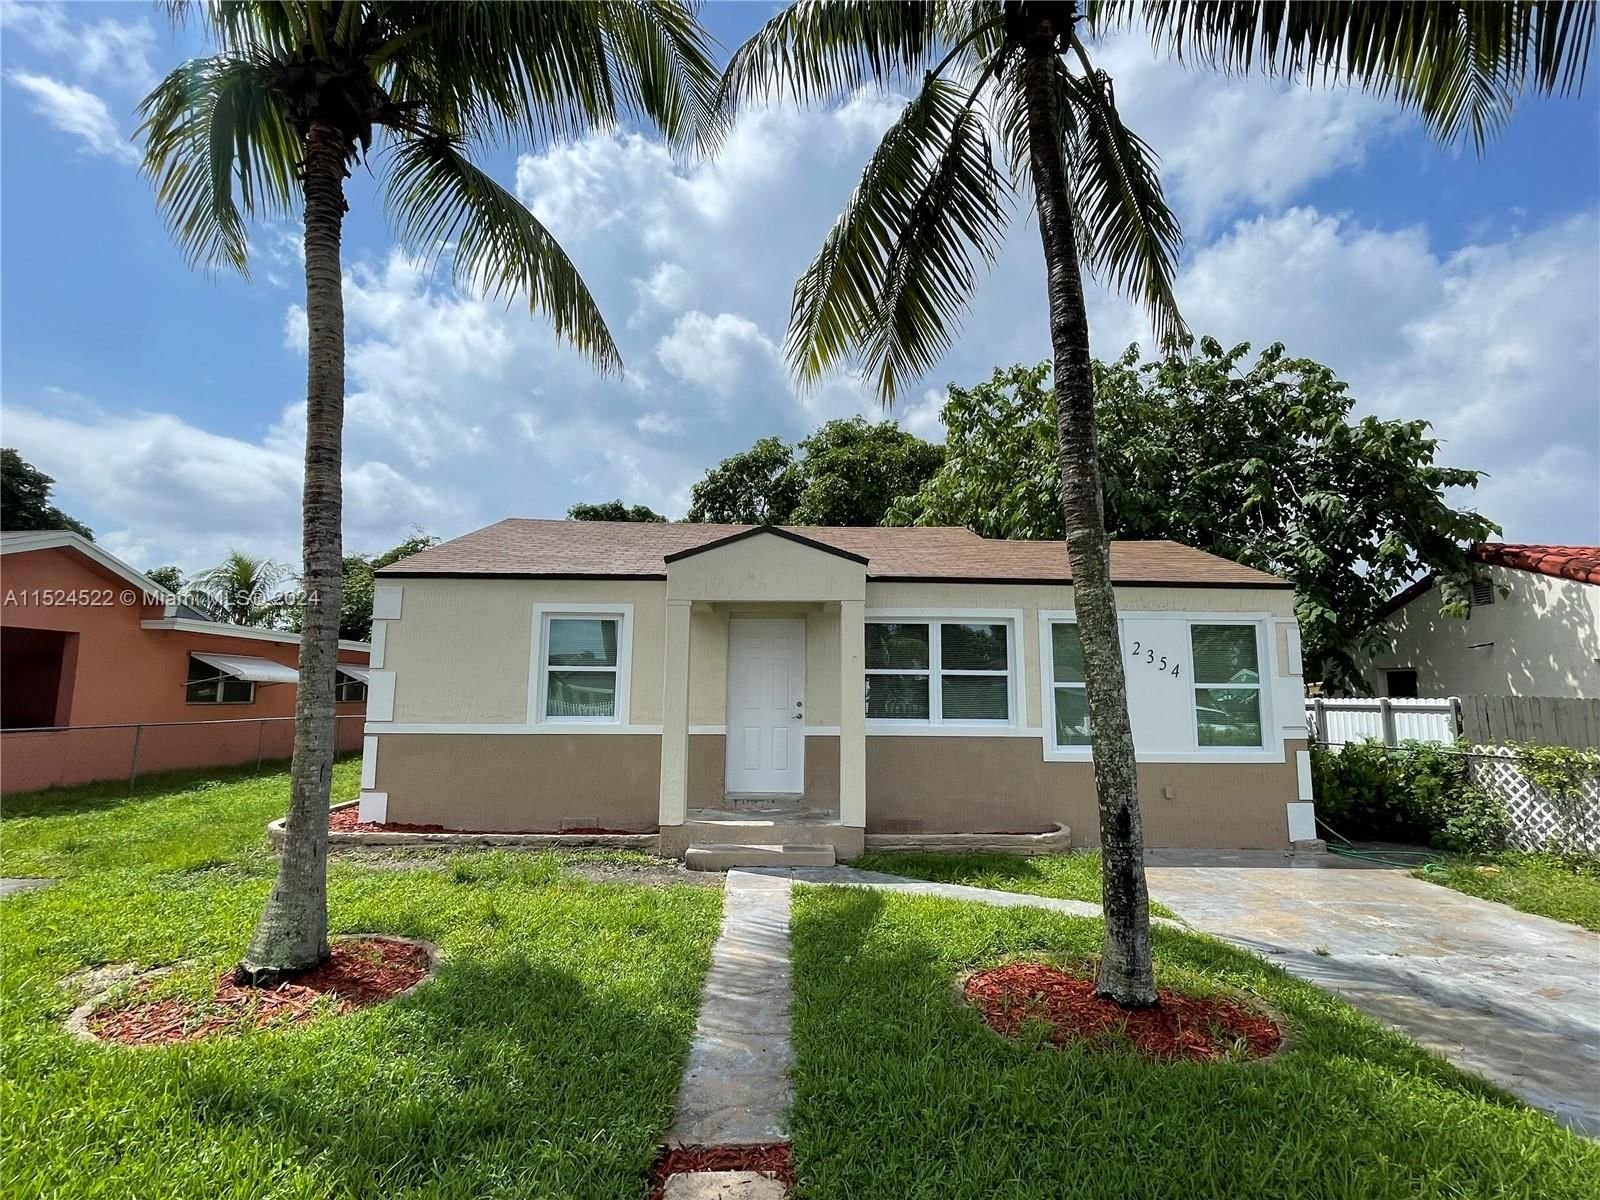 Real estate property located at 2354 85th St, Miami-Dade County, SCHOOL PK, Miami, FL